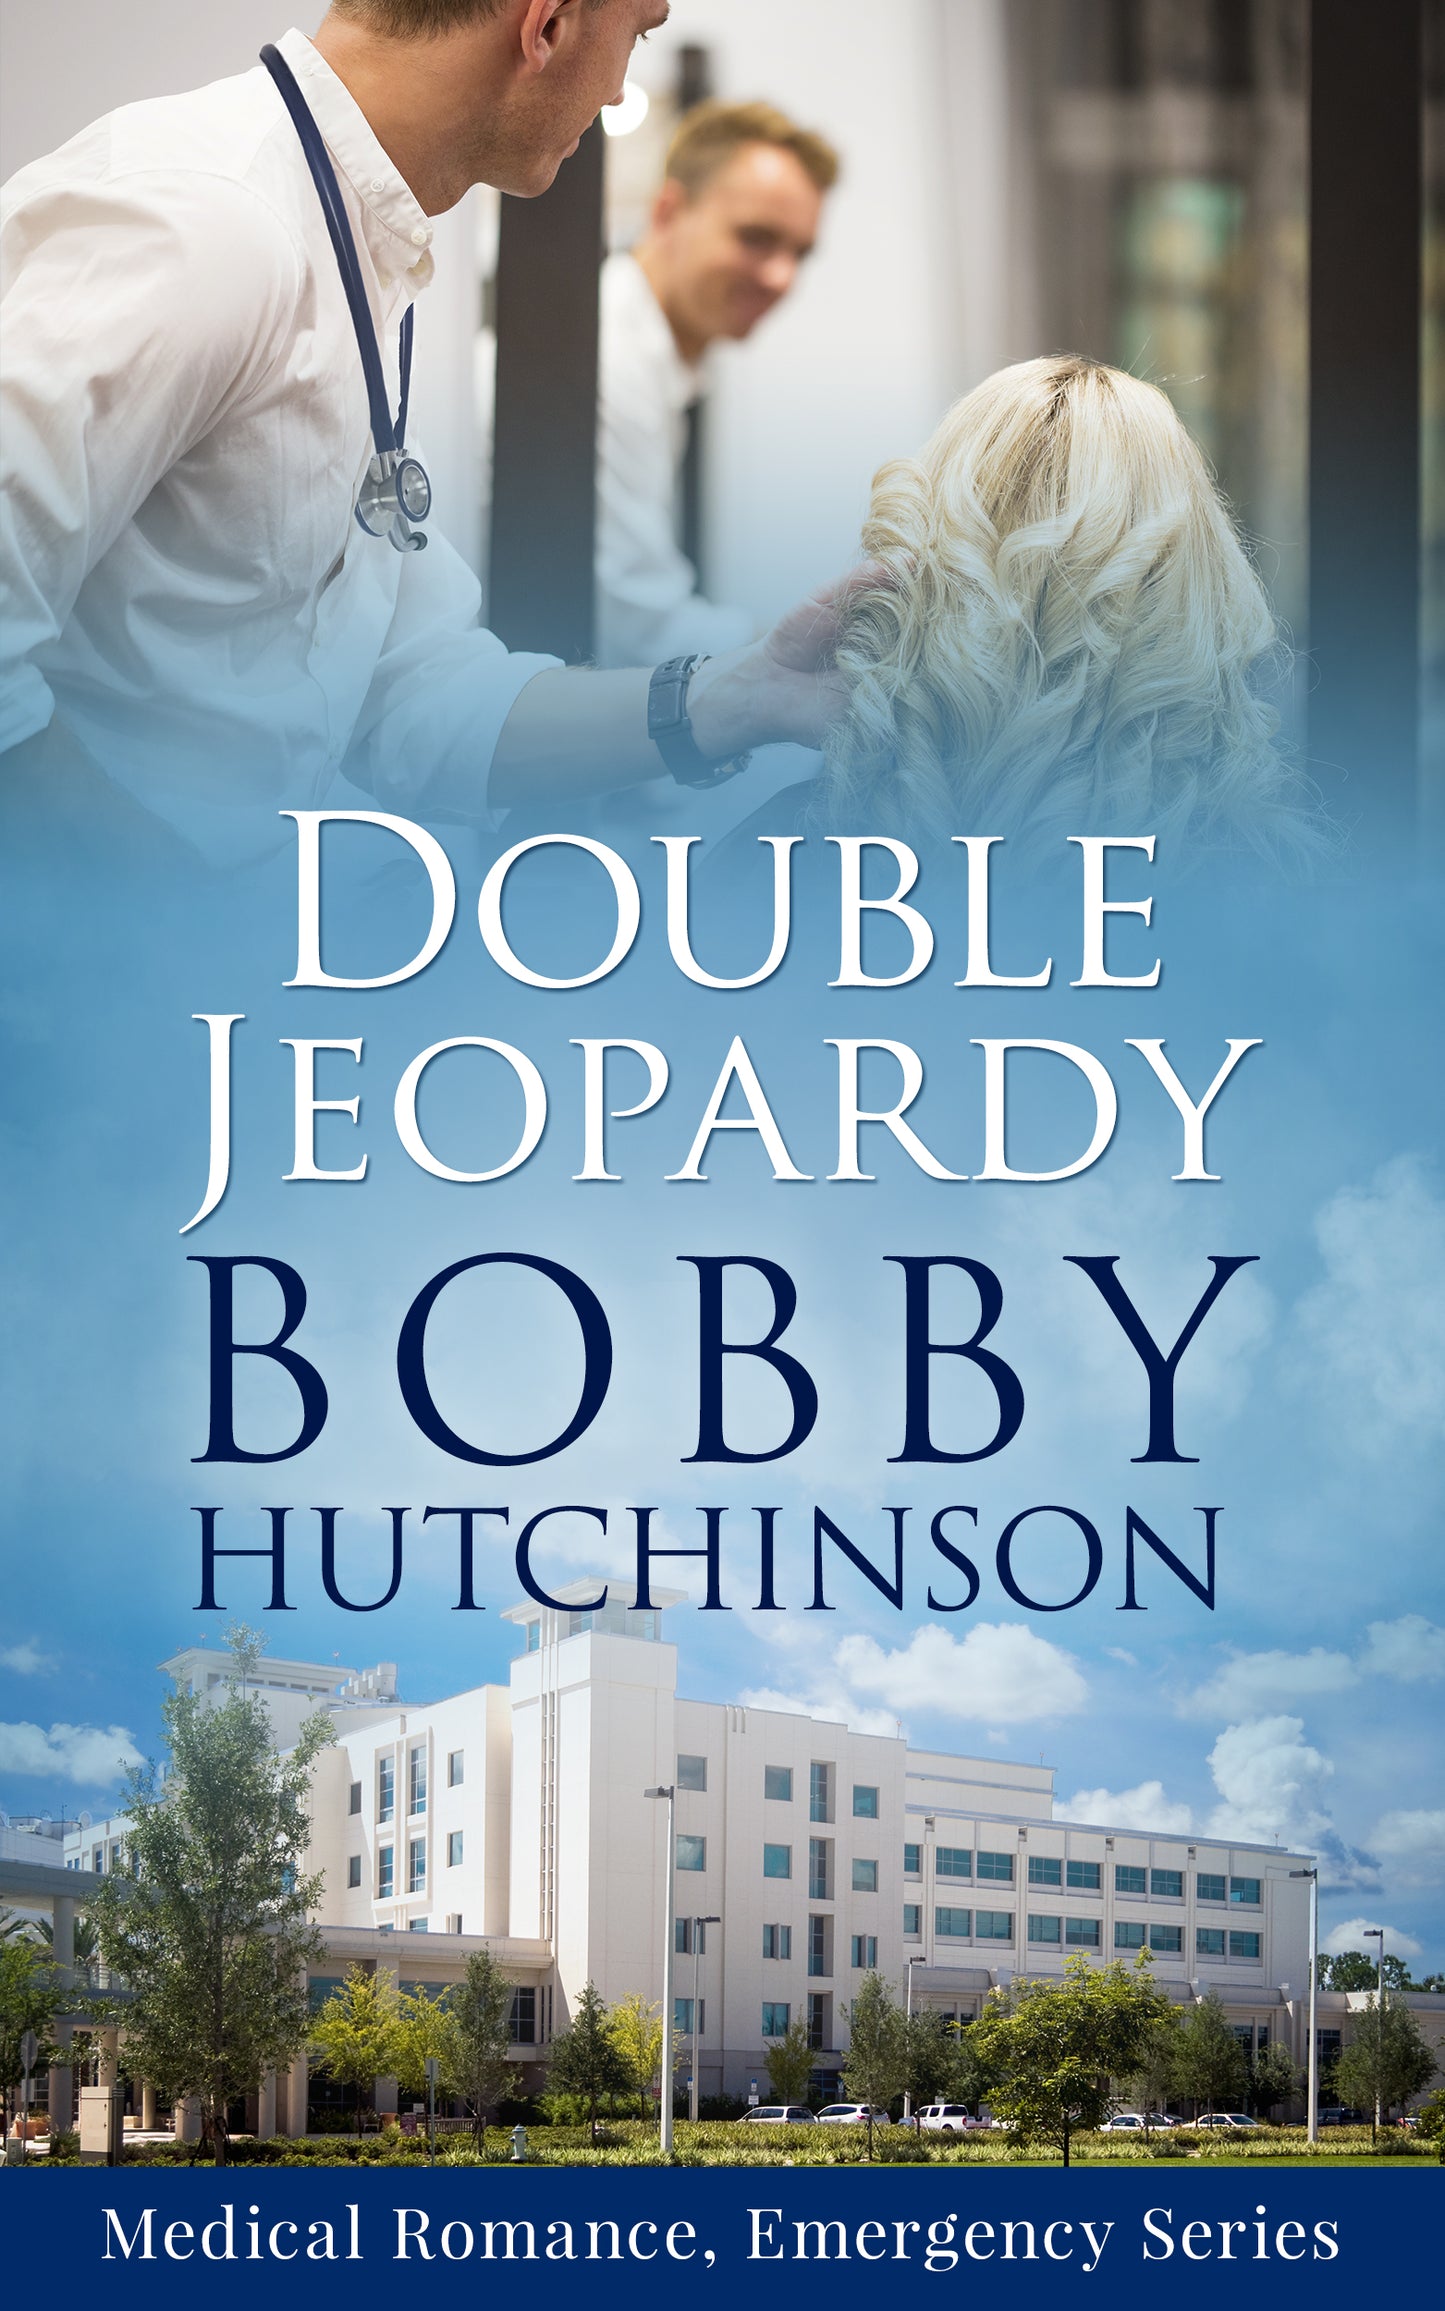 Double Jeopardy (Emergency Series, Book 3)